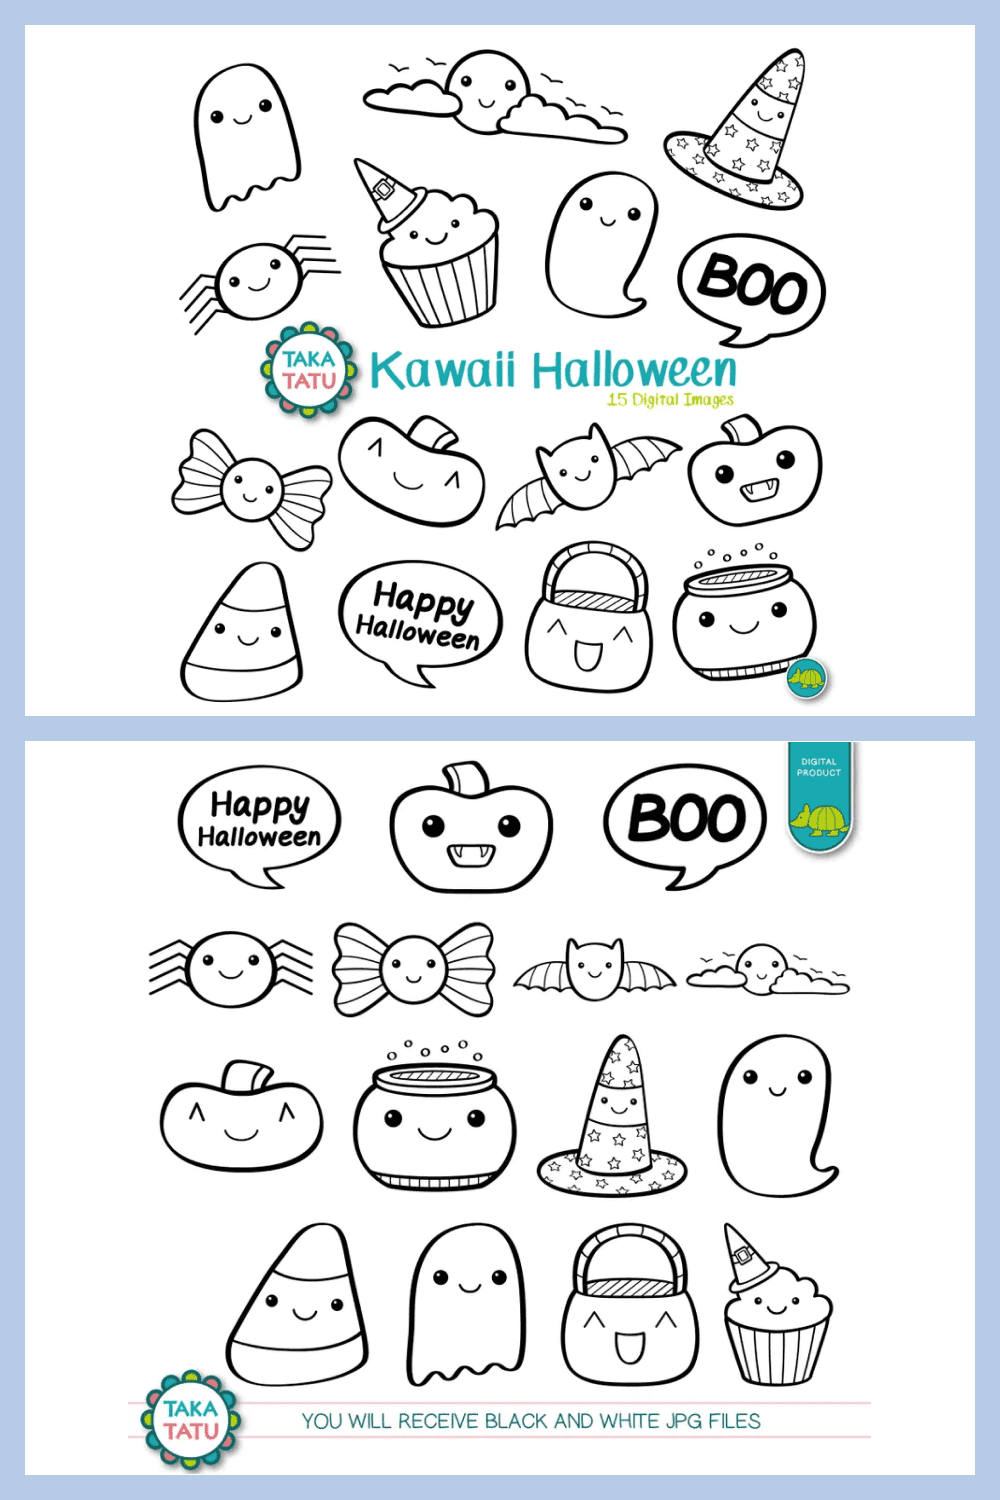 Oh, those cute Korean Halloween illustrations.